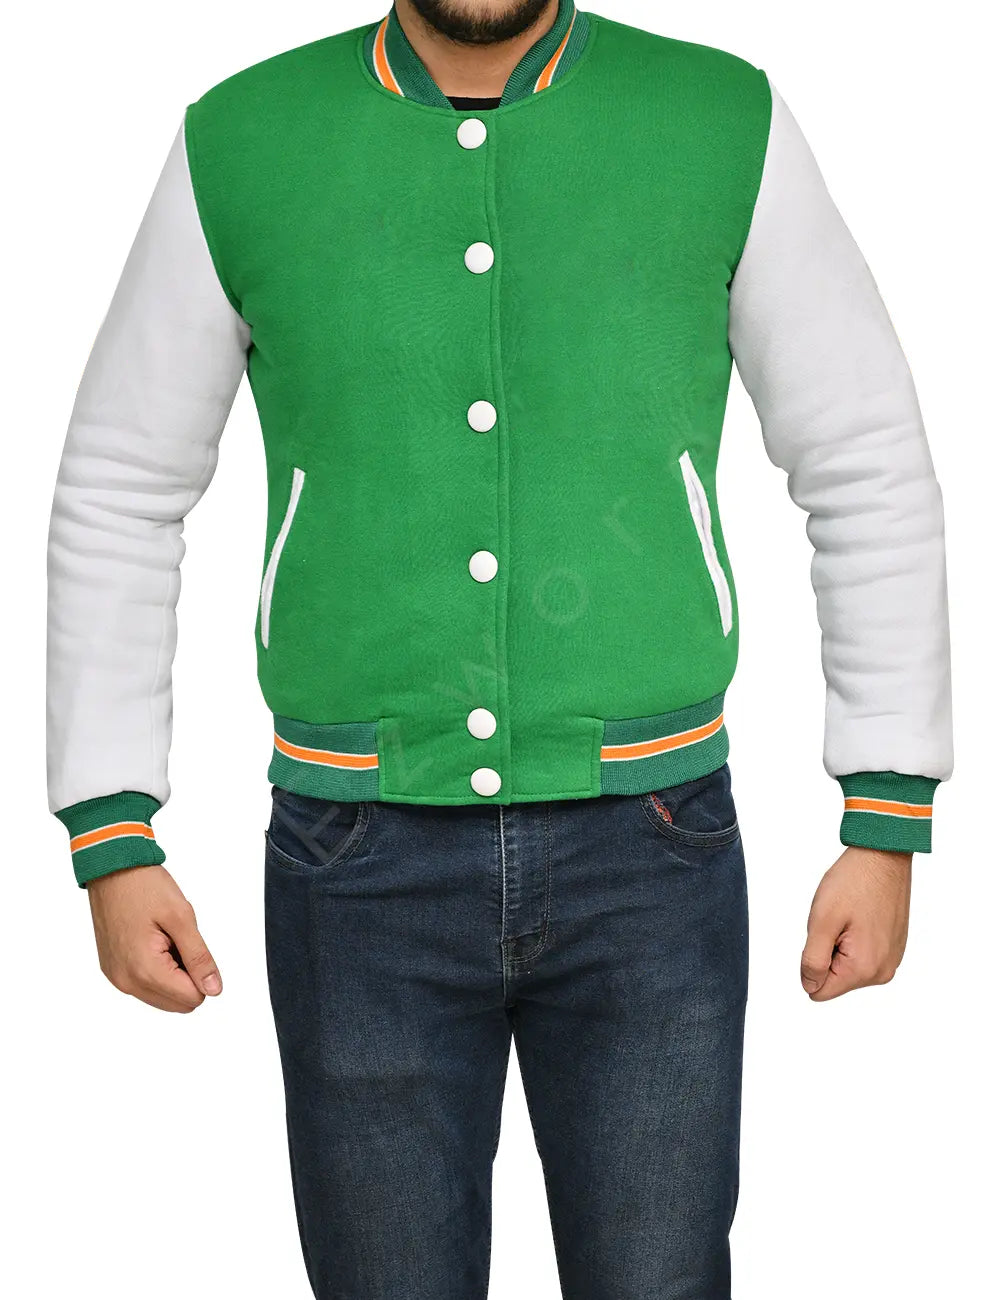 Mens Green and White Varsity Jacket